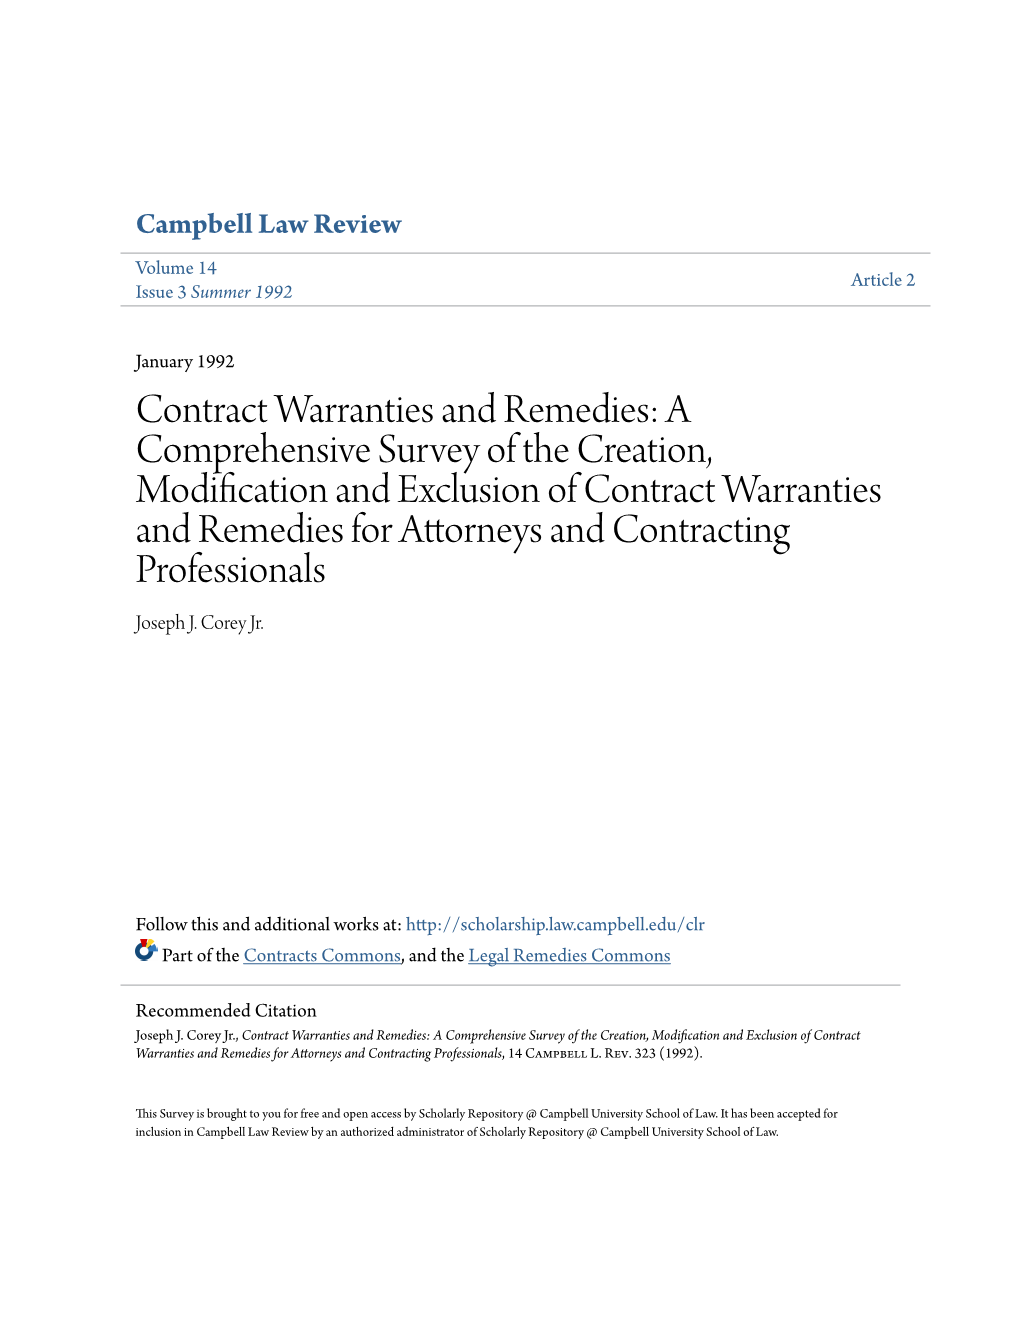 Contract Warranties and Remedies